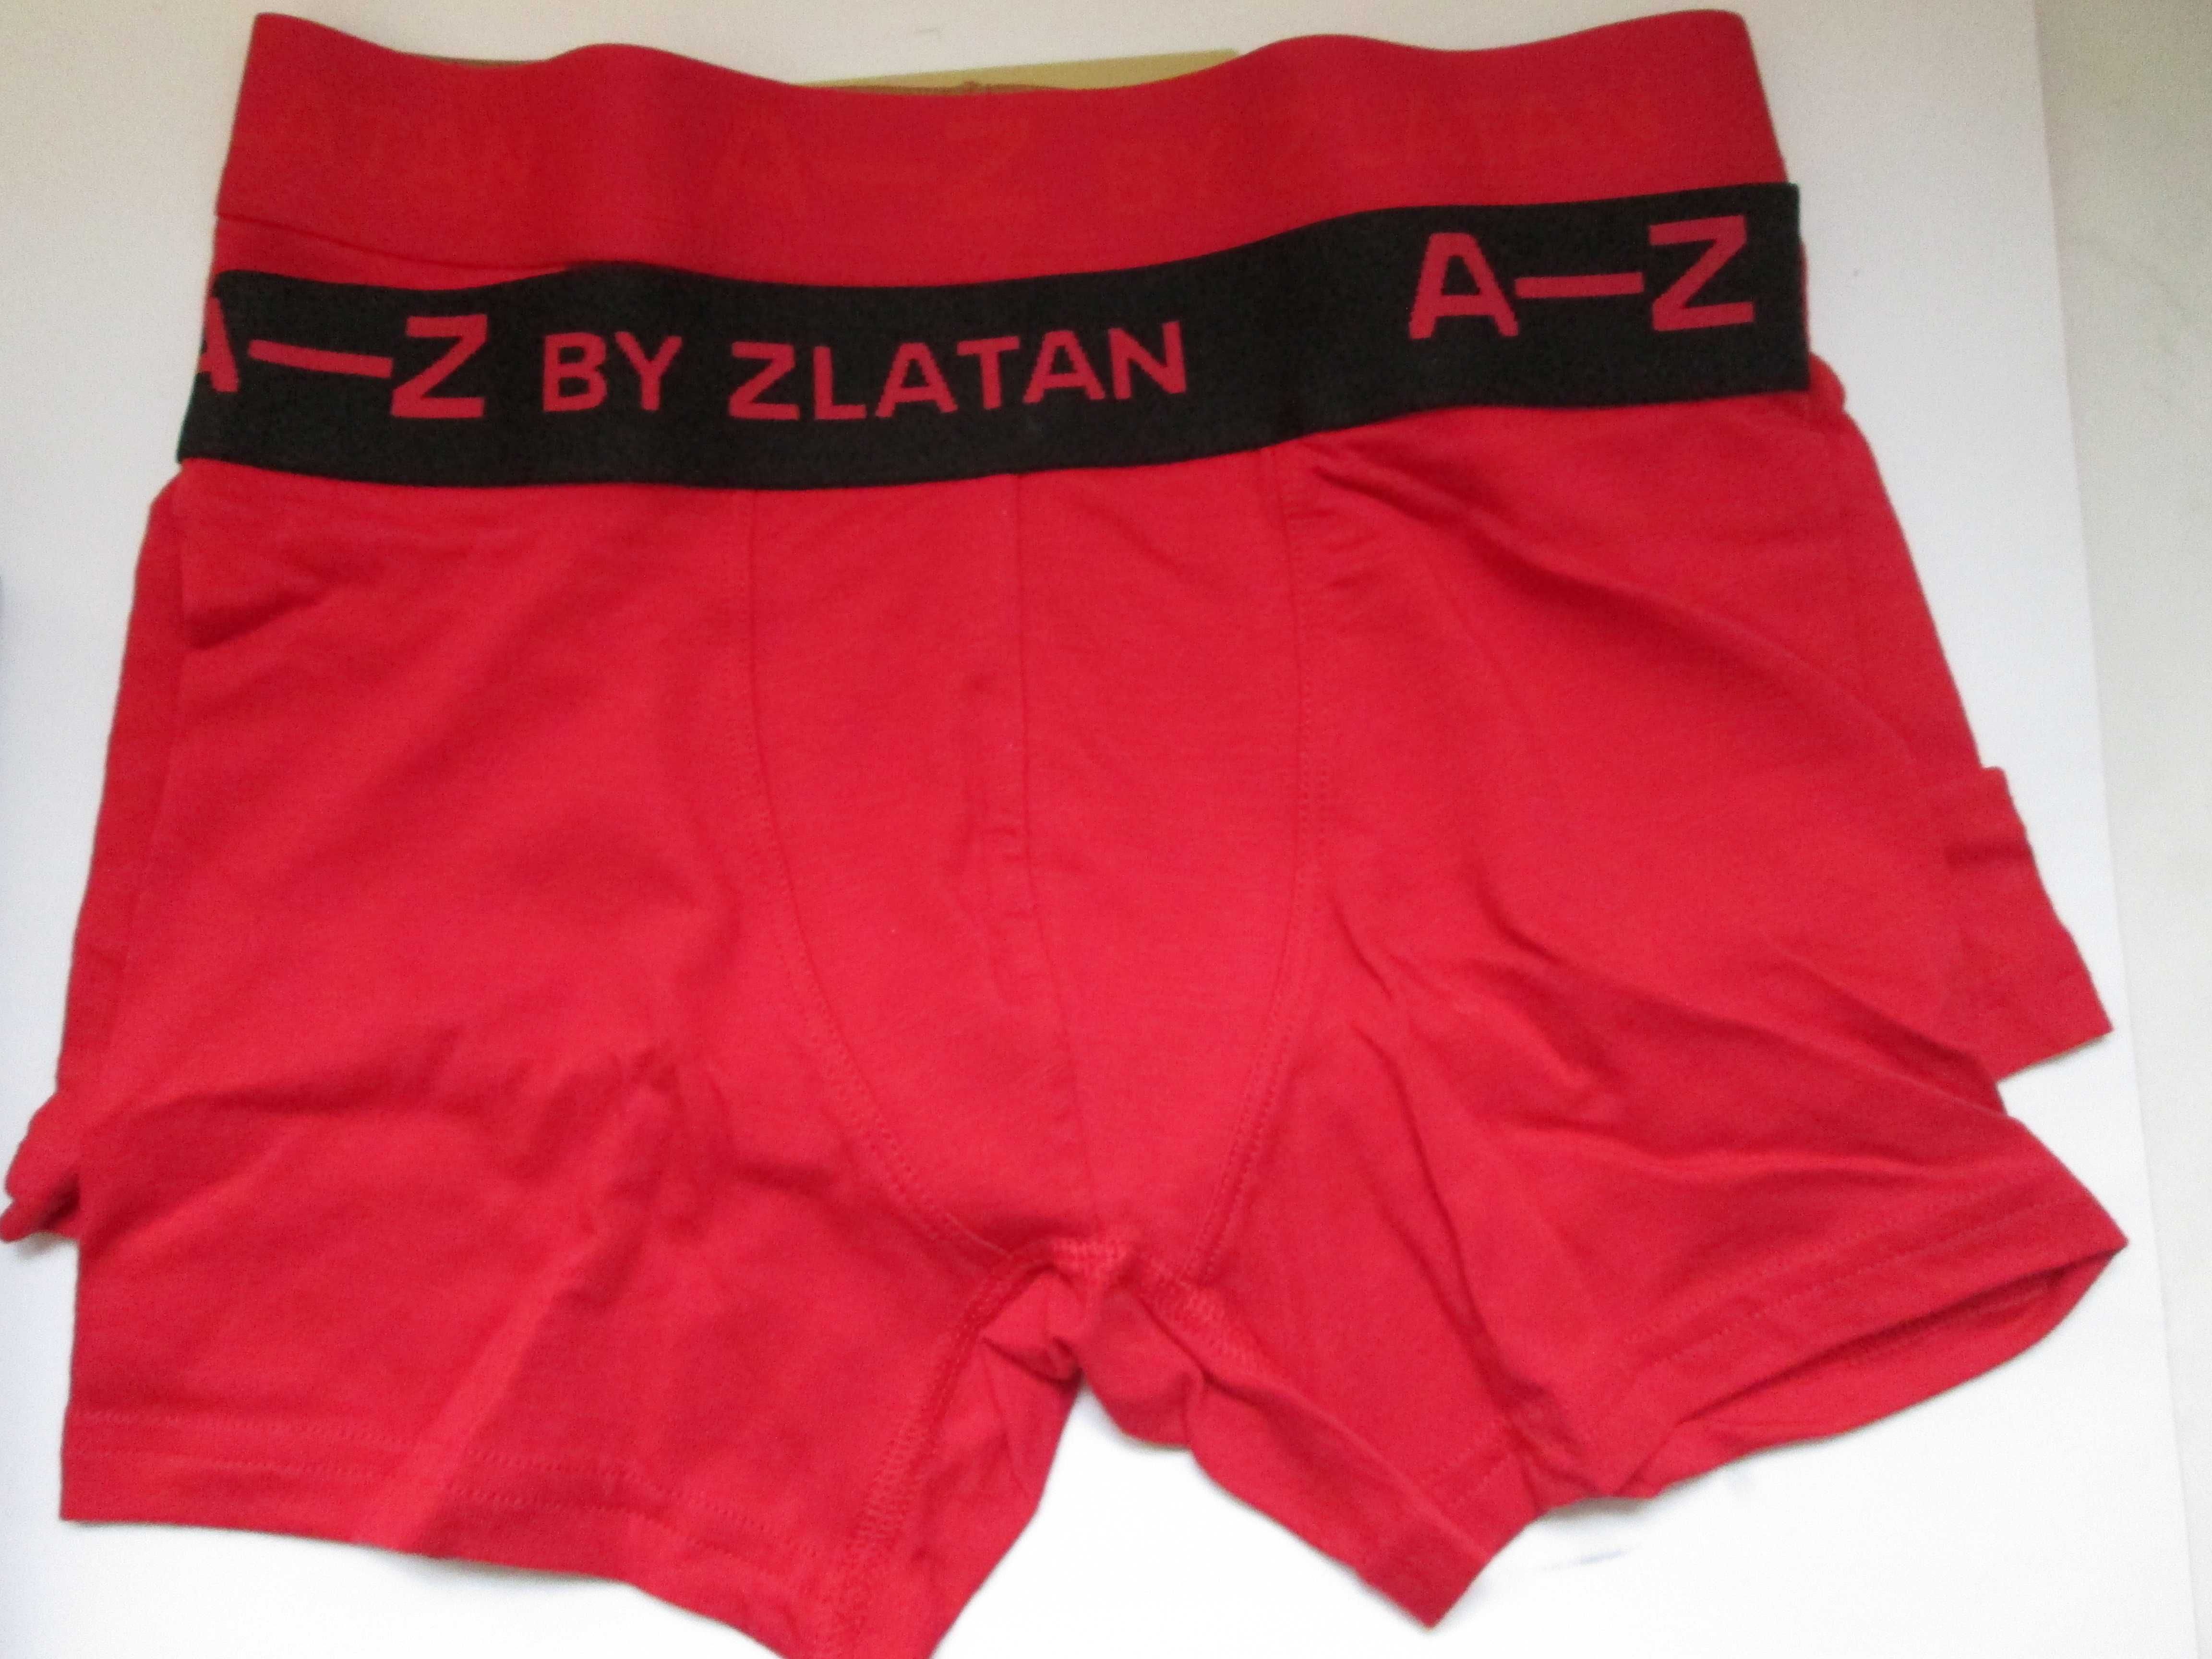 A-Z By Zlatan bokserki Junior 2-Pack 134/140 cm